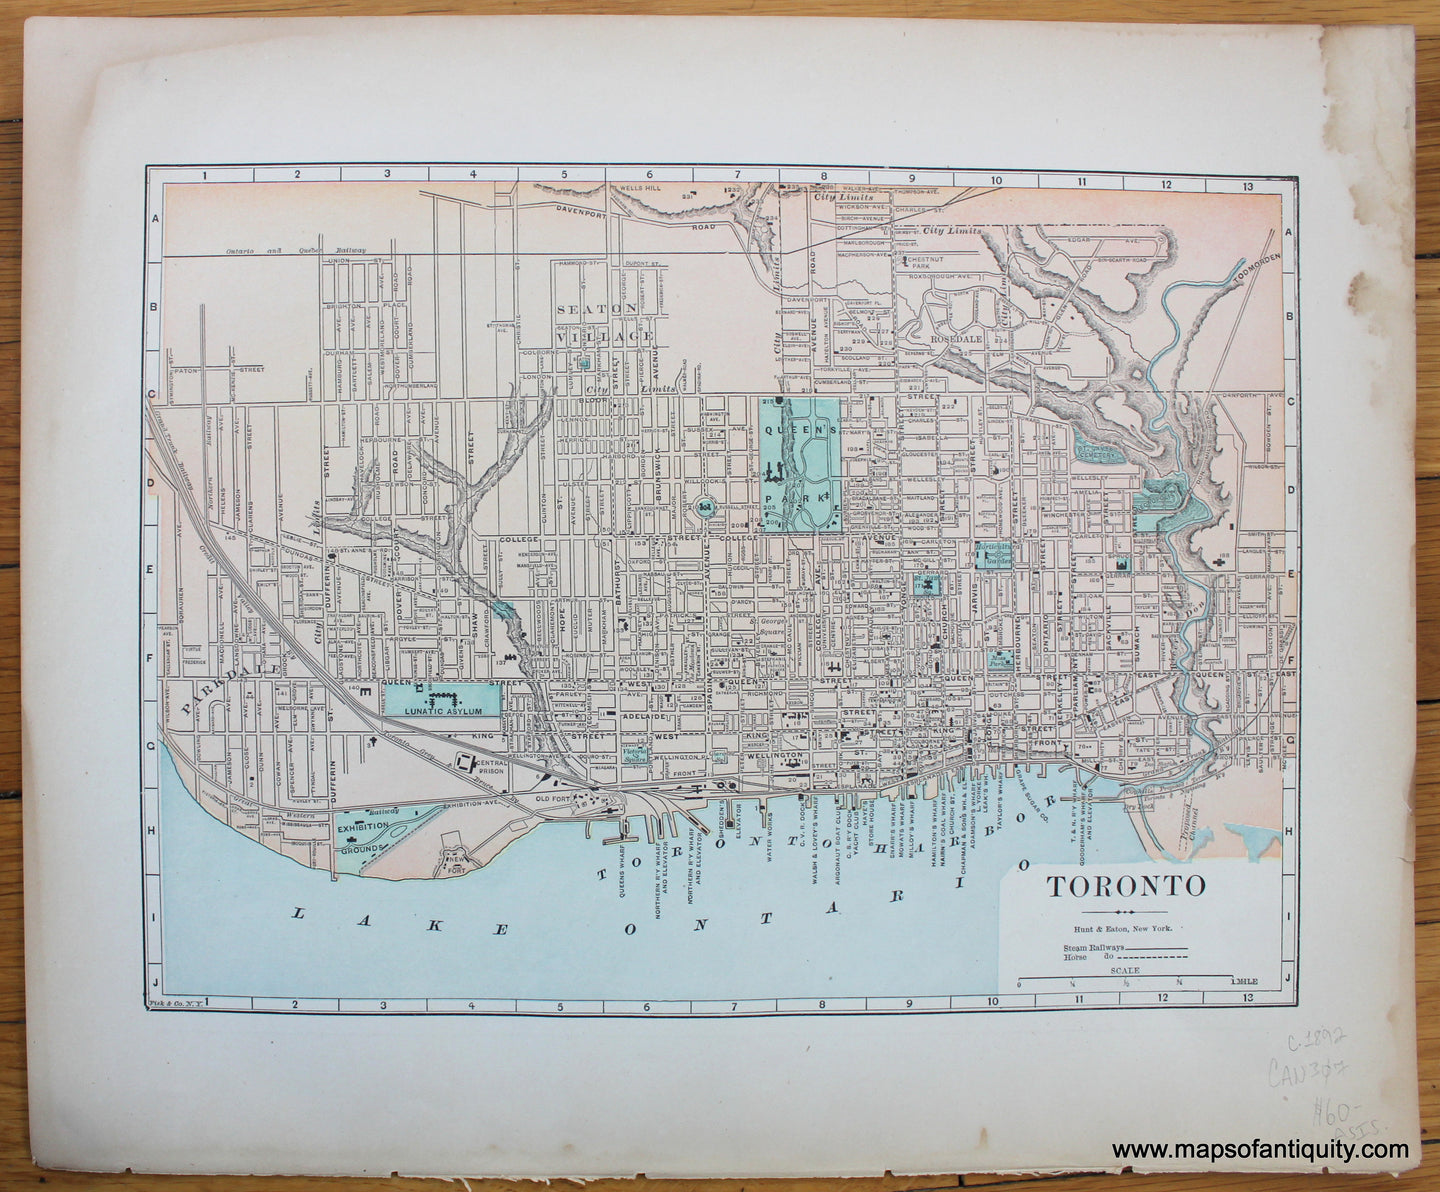 Antique-Map-Canada-Toronto-Ontario-City-Hunt-&-Eaton-1892-1890s-1800s-Late-19th-Century-Maps-of-Antiquity